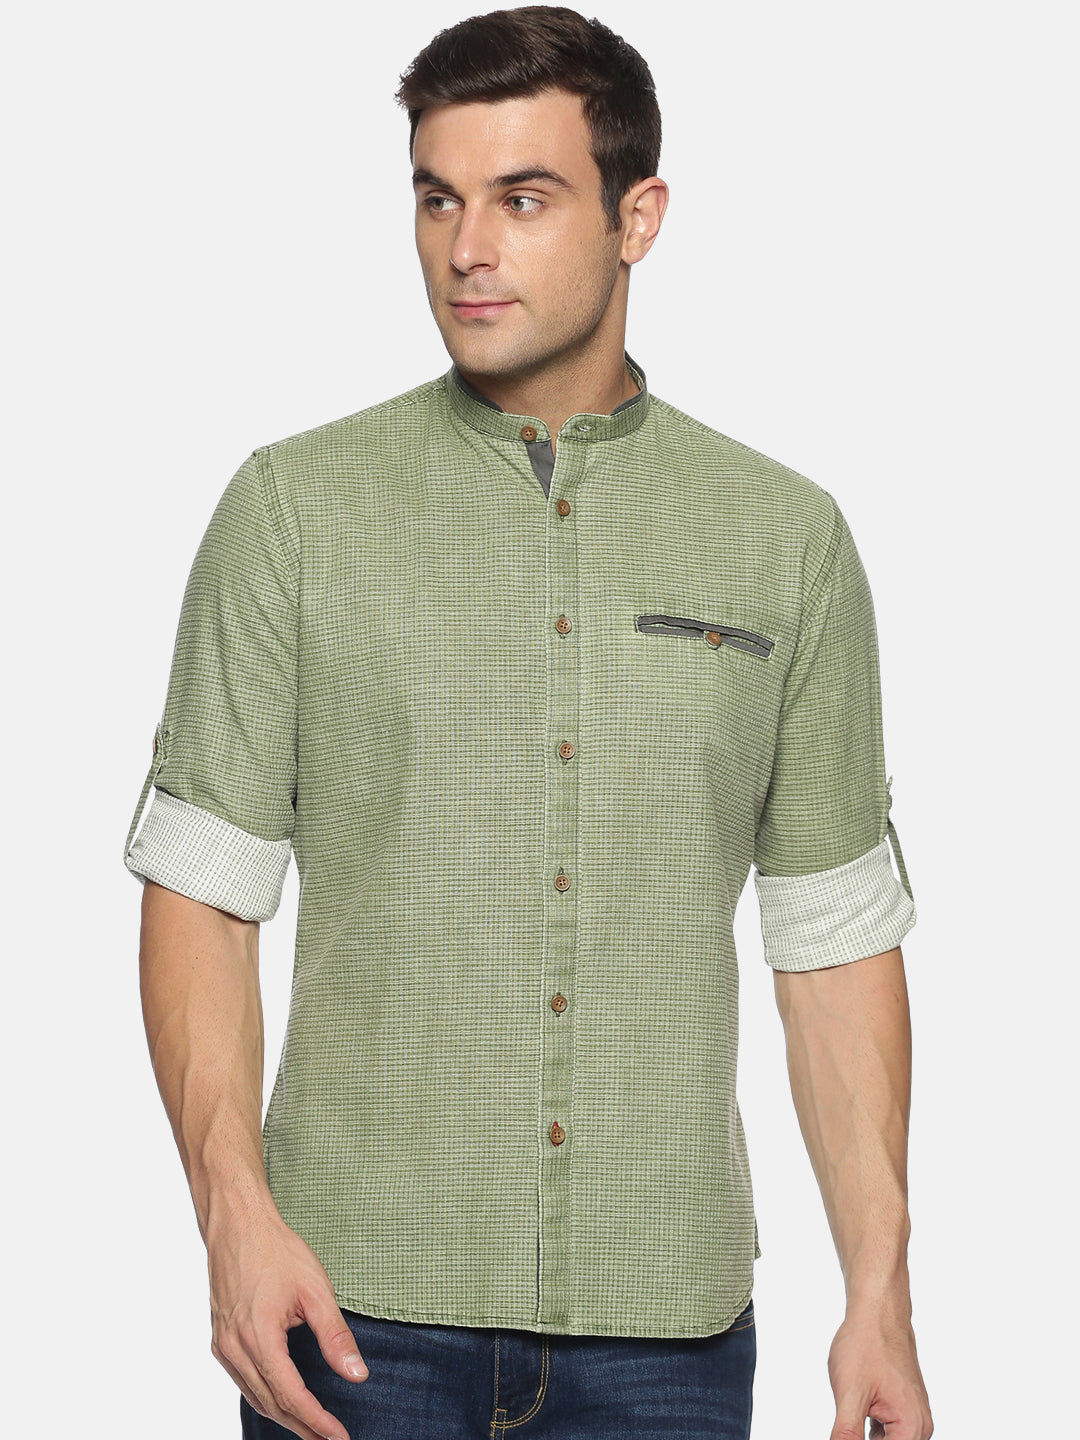 Don Vino Men's Green Checkered Full Sleeve Casual Shirt